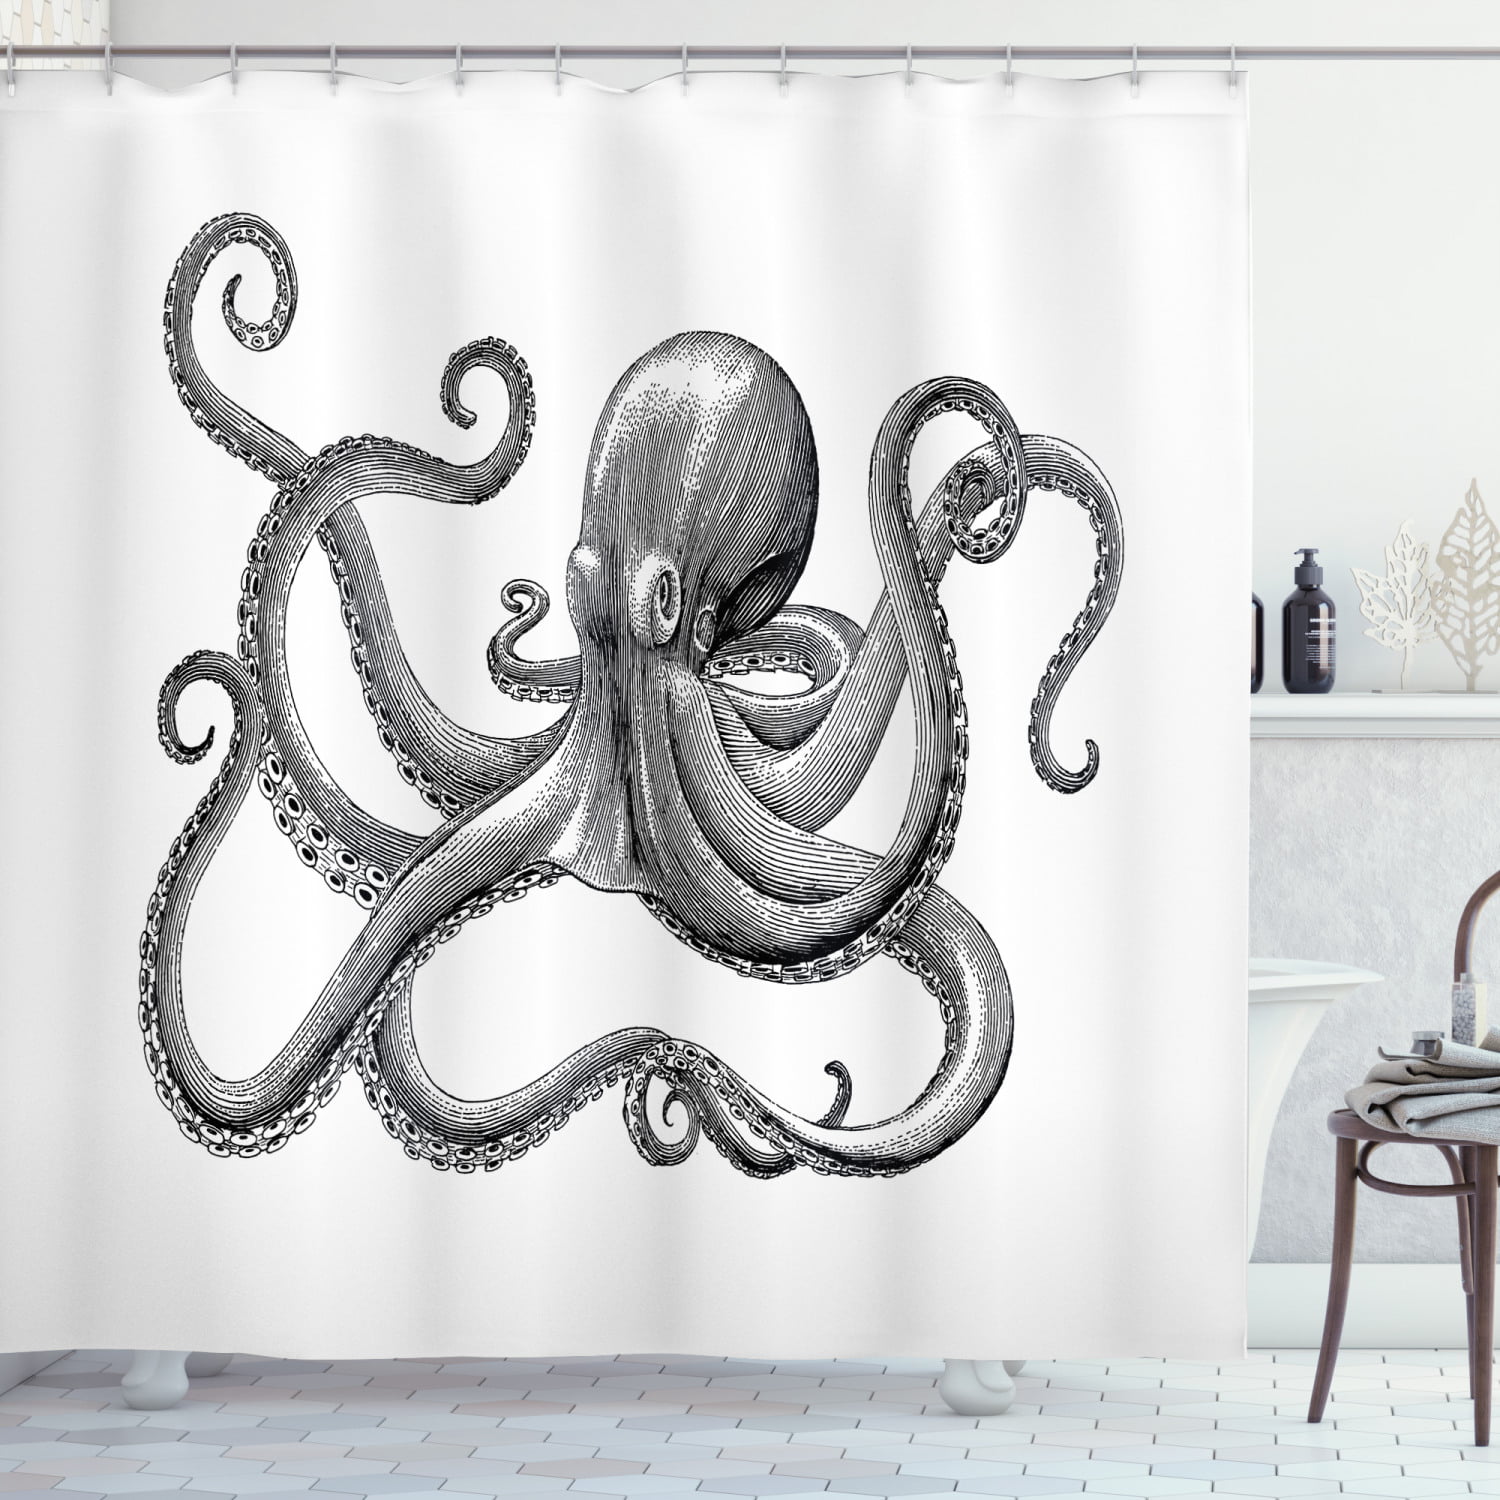 Octopus Shower Curtain Vintage Style, Cotton Octopus Shower Curtain